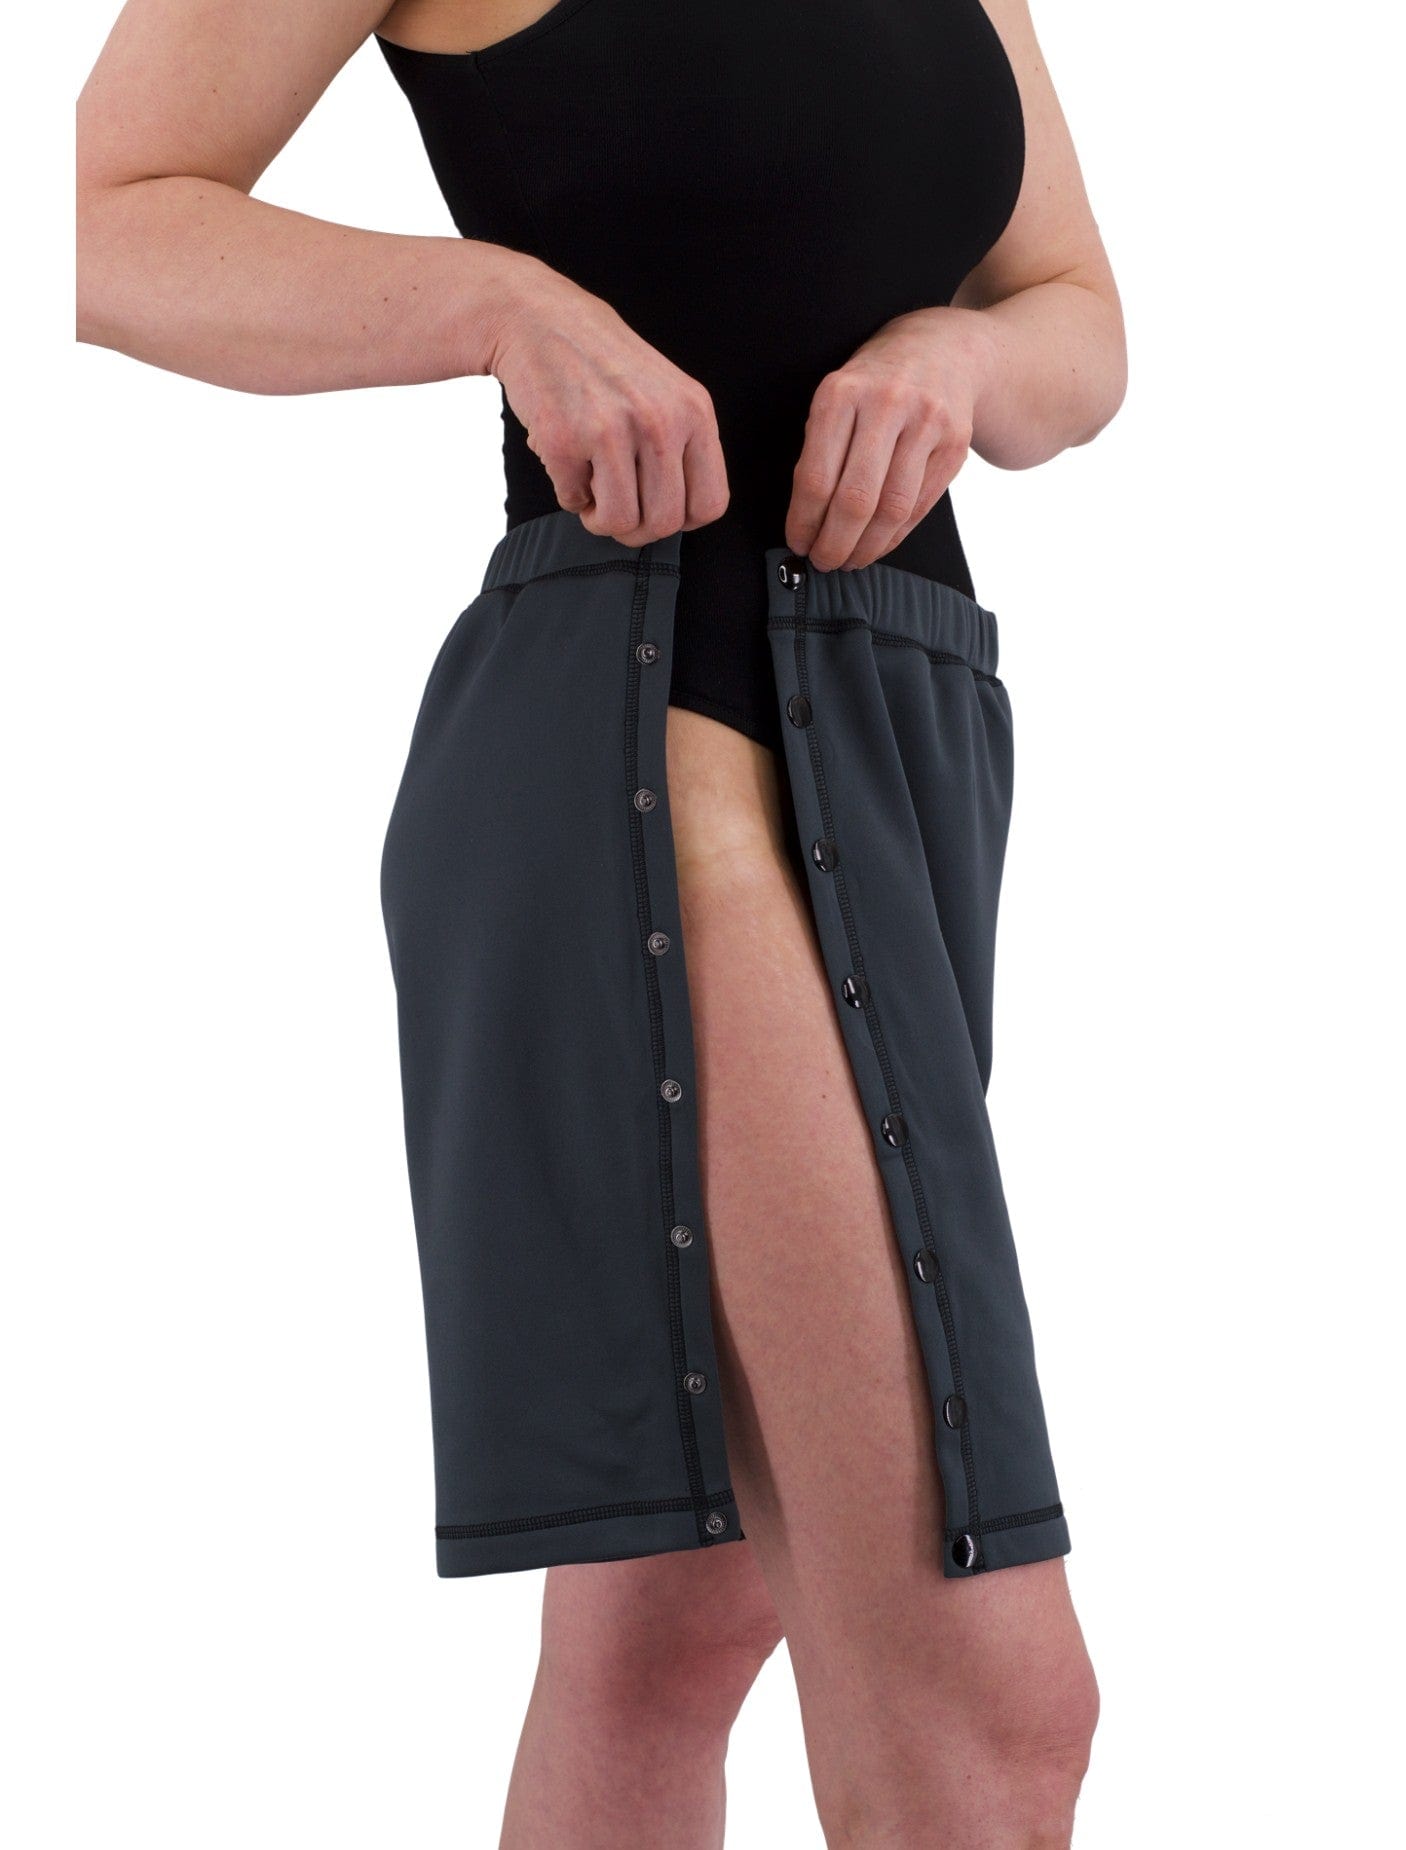 Buy Post Surgery Tearaway Shorts Men's Women's Unisex Sizing